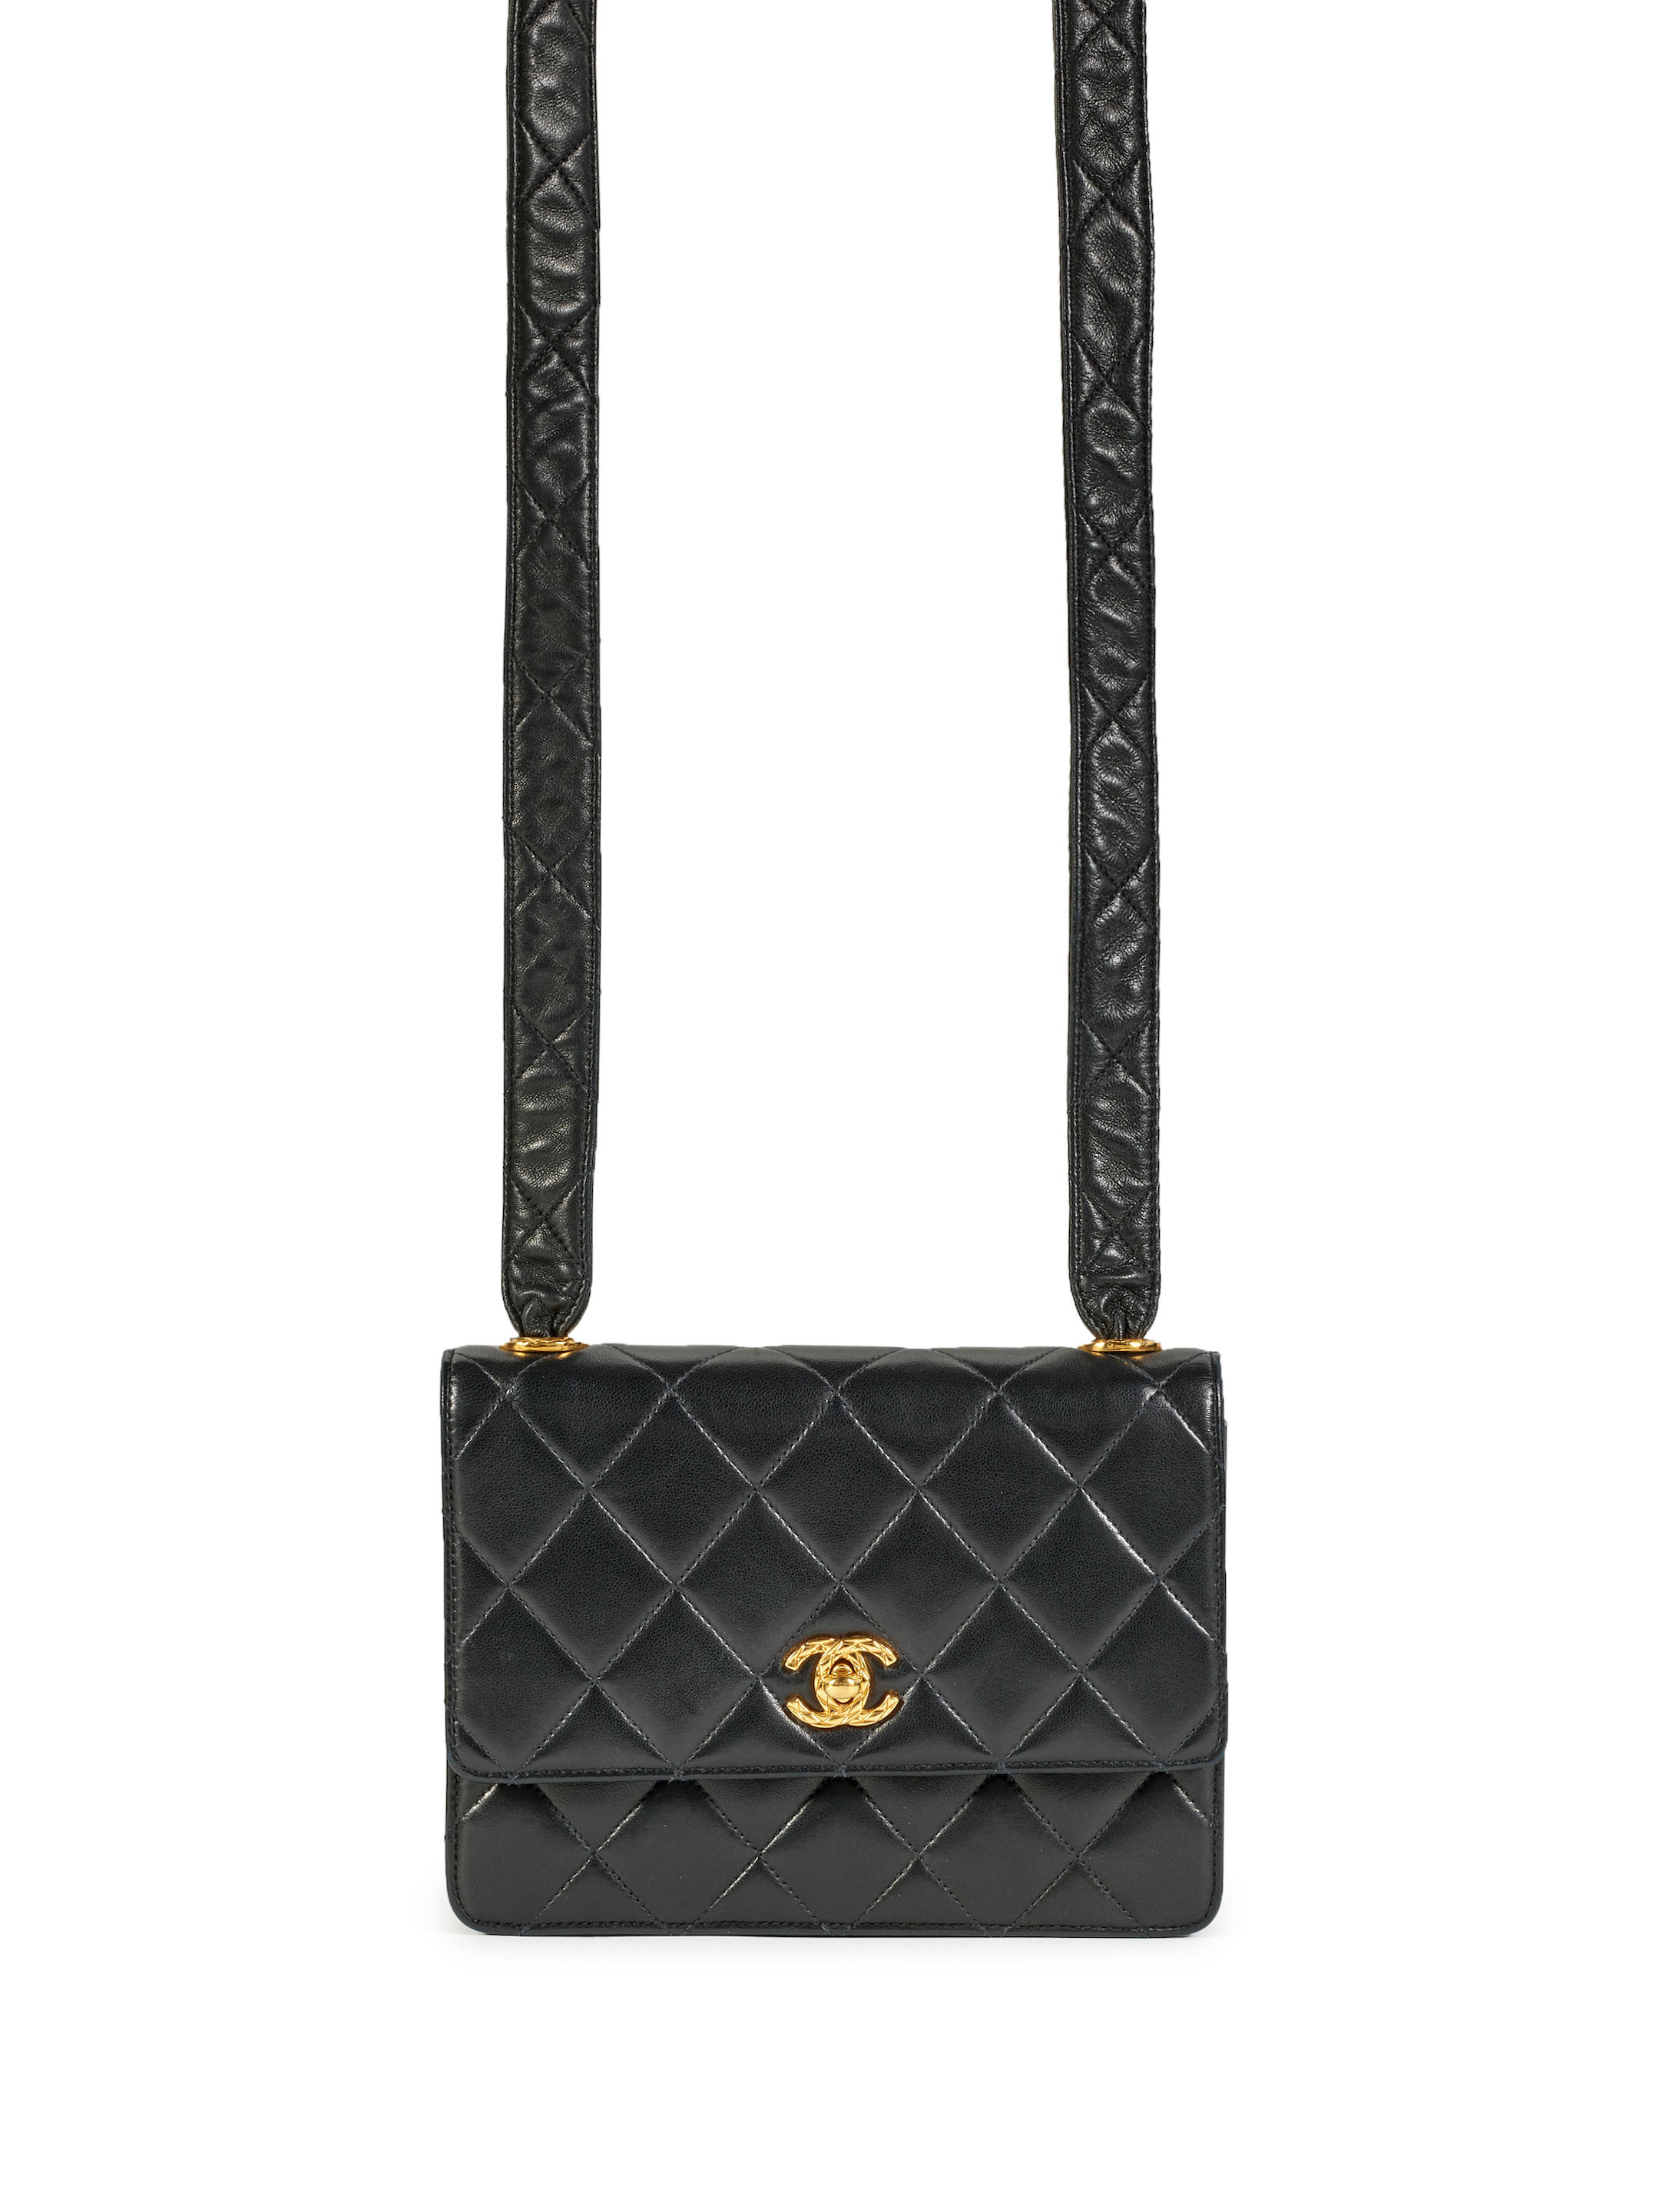 Chanel Black Cc Accordion Shoulder Bag